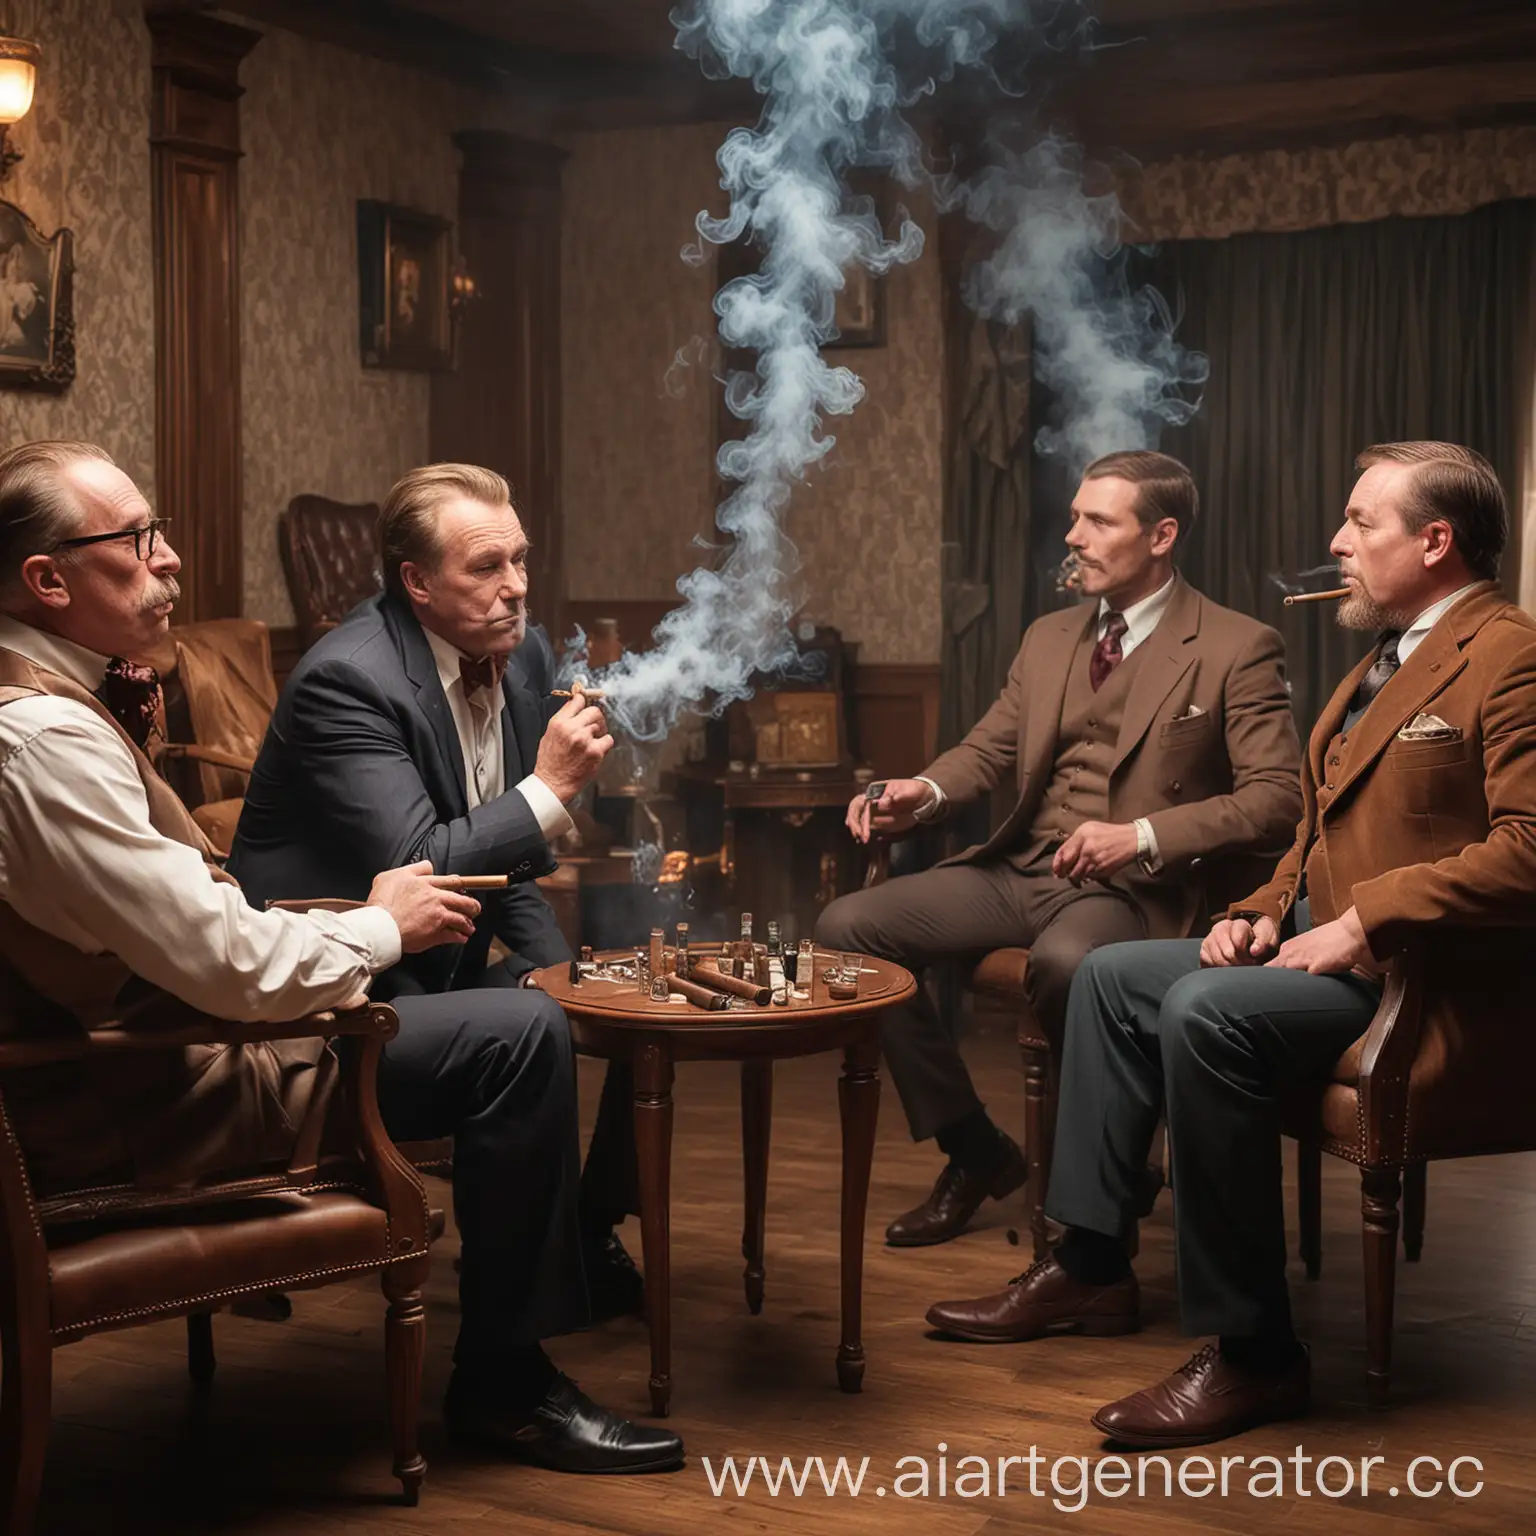 Group-of-Men-Smoking-Cigars-Discussing-a-Stranger